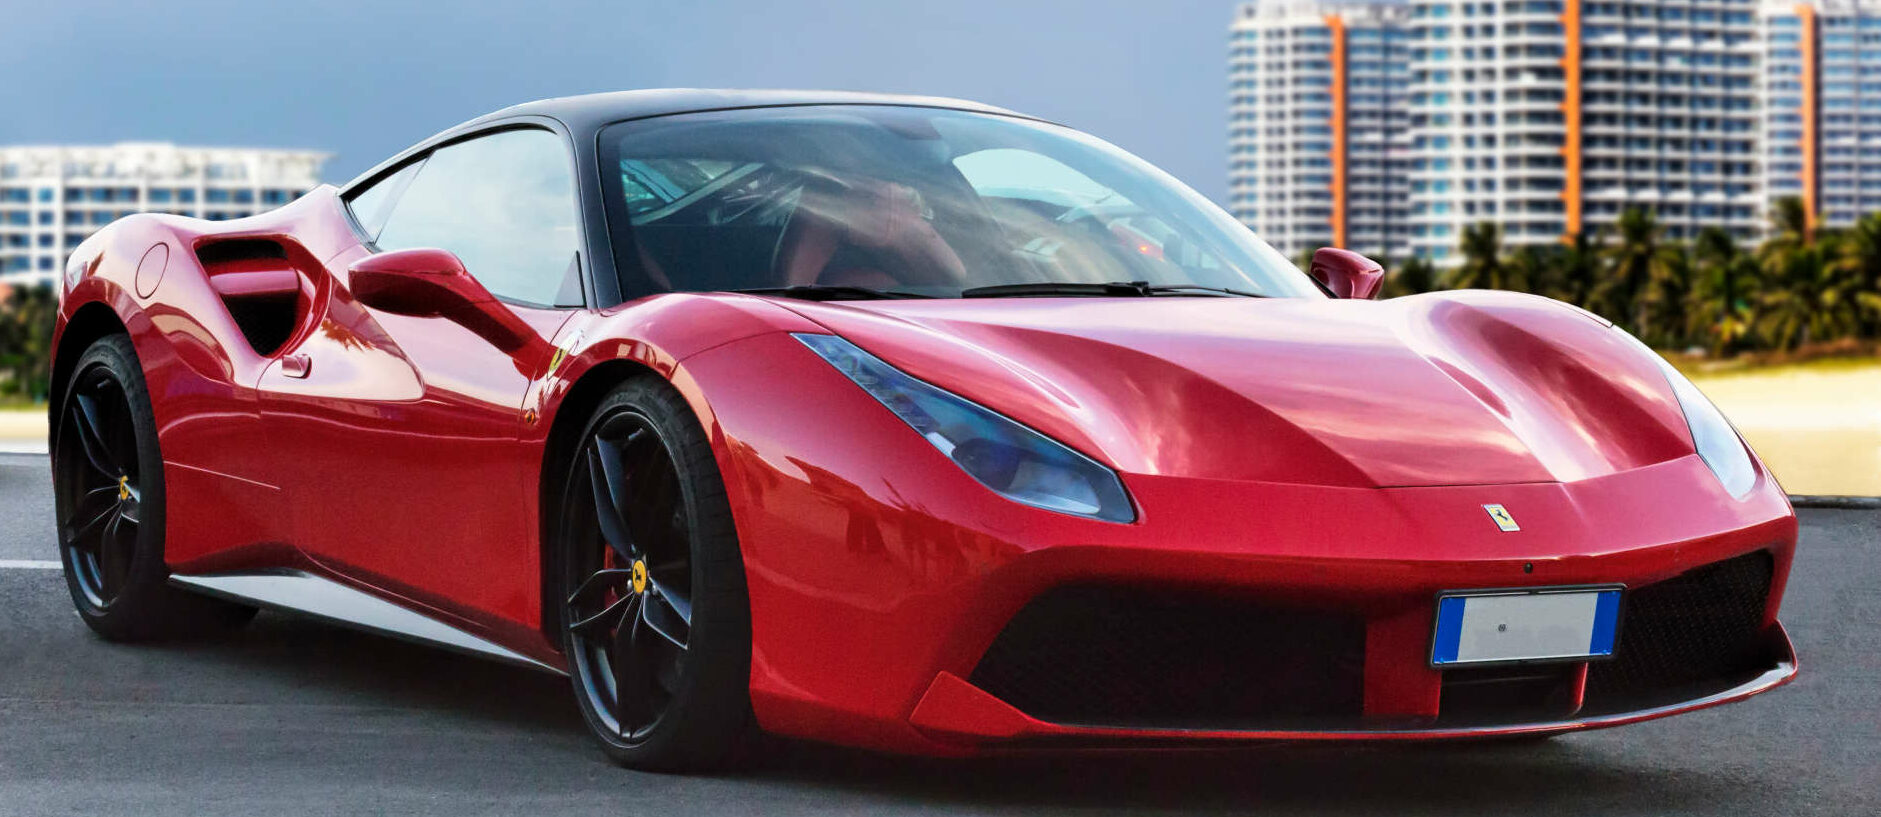 Beautiful design of luxury model sports red supercar Ferrari